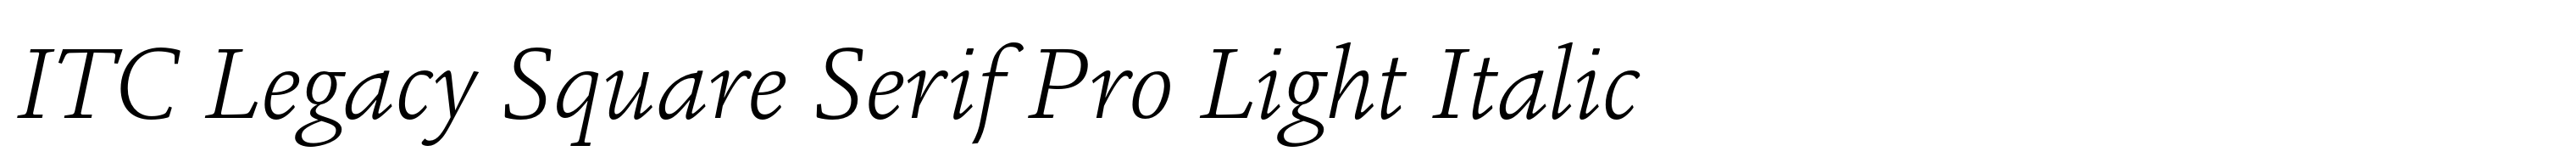 ITC Legacy Square Serif Pro Light Italic